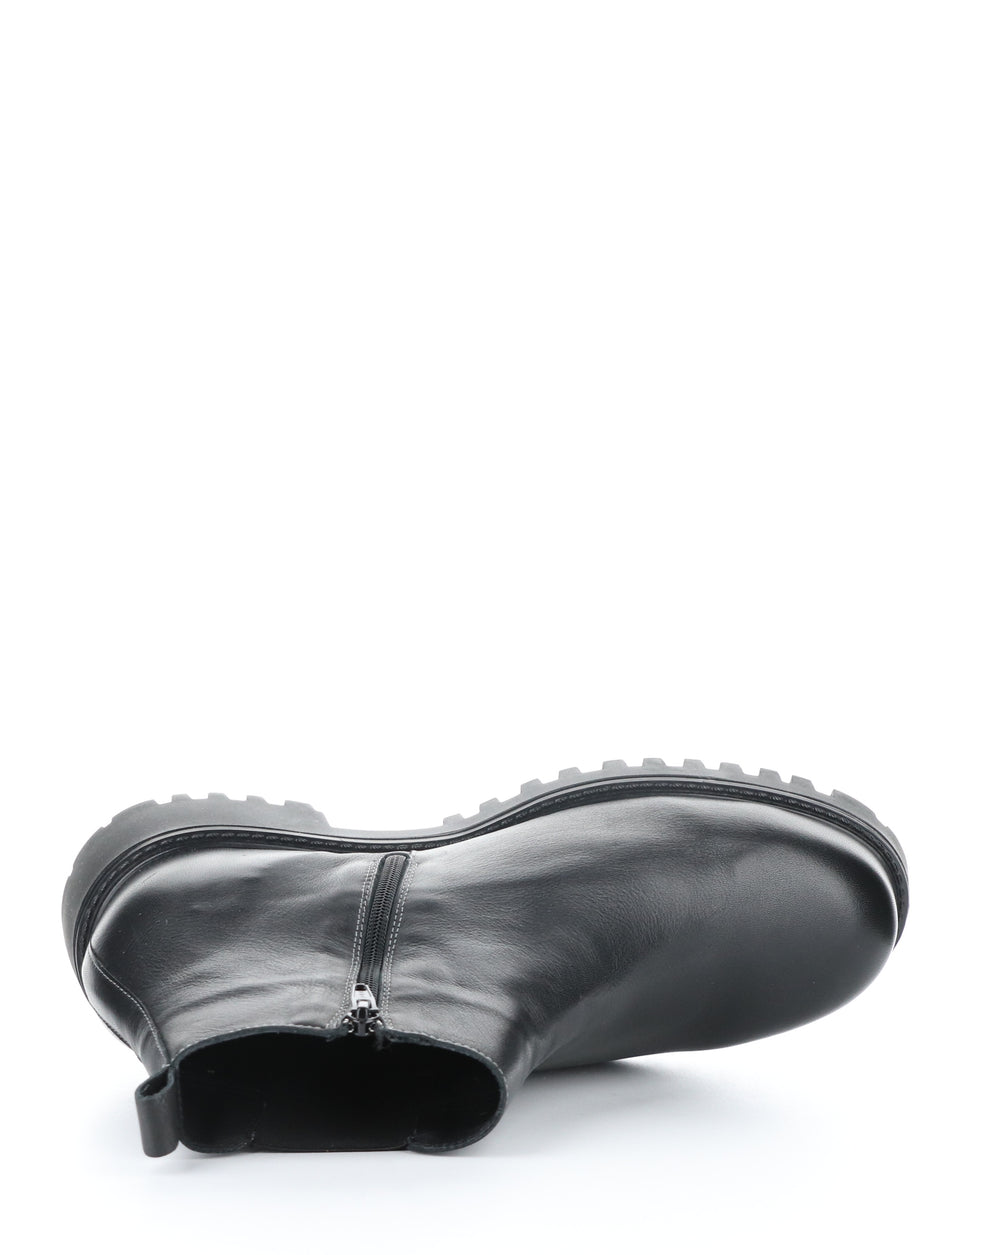 DAX BLACK Round Toe Boots